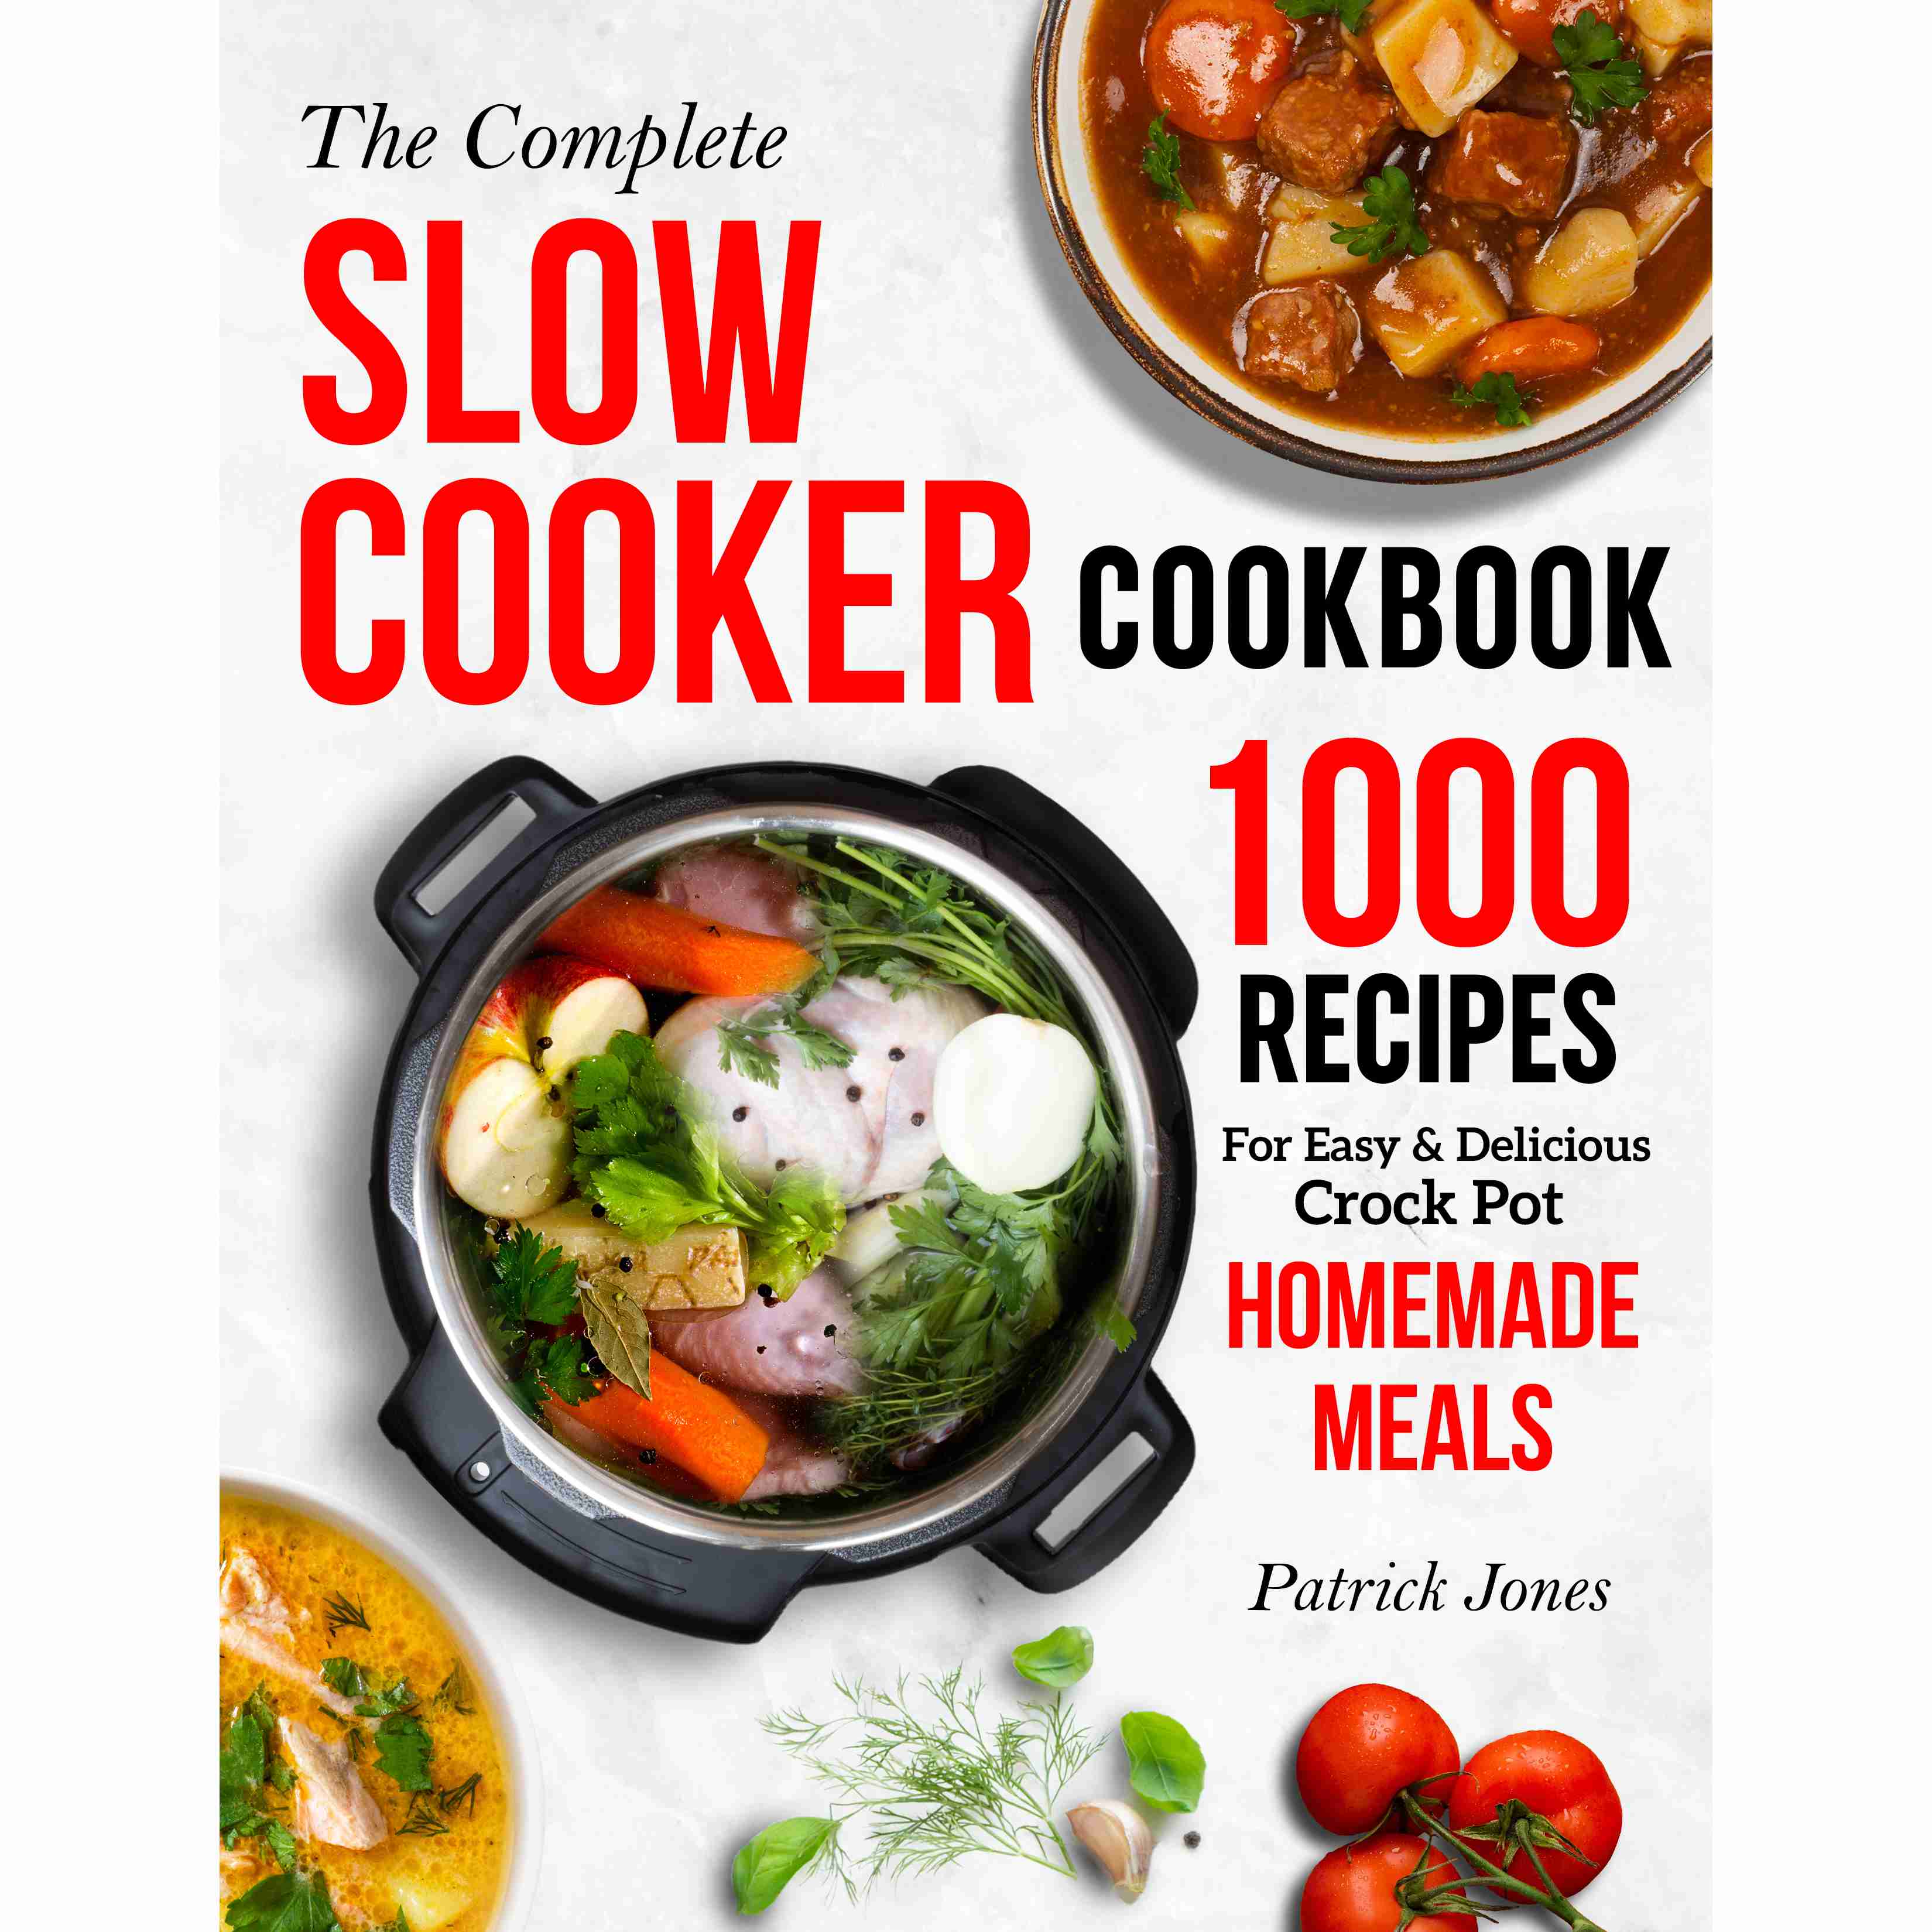 slow-cooker-cookbook-patrick-jones with cash back rebate